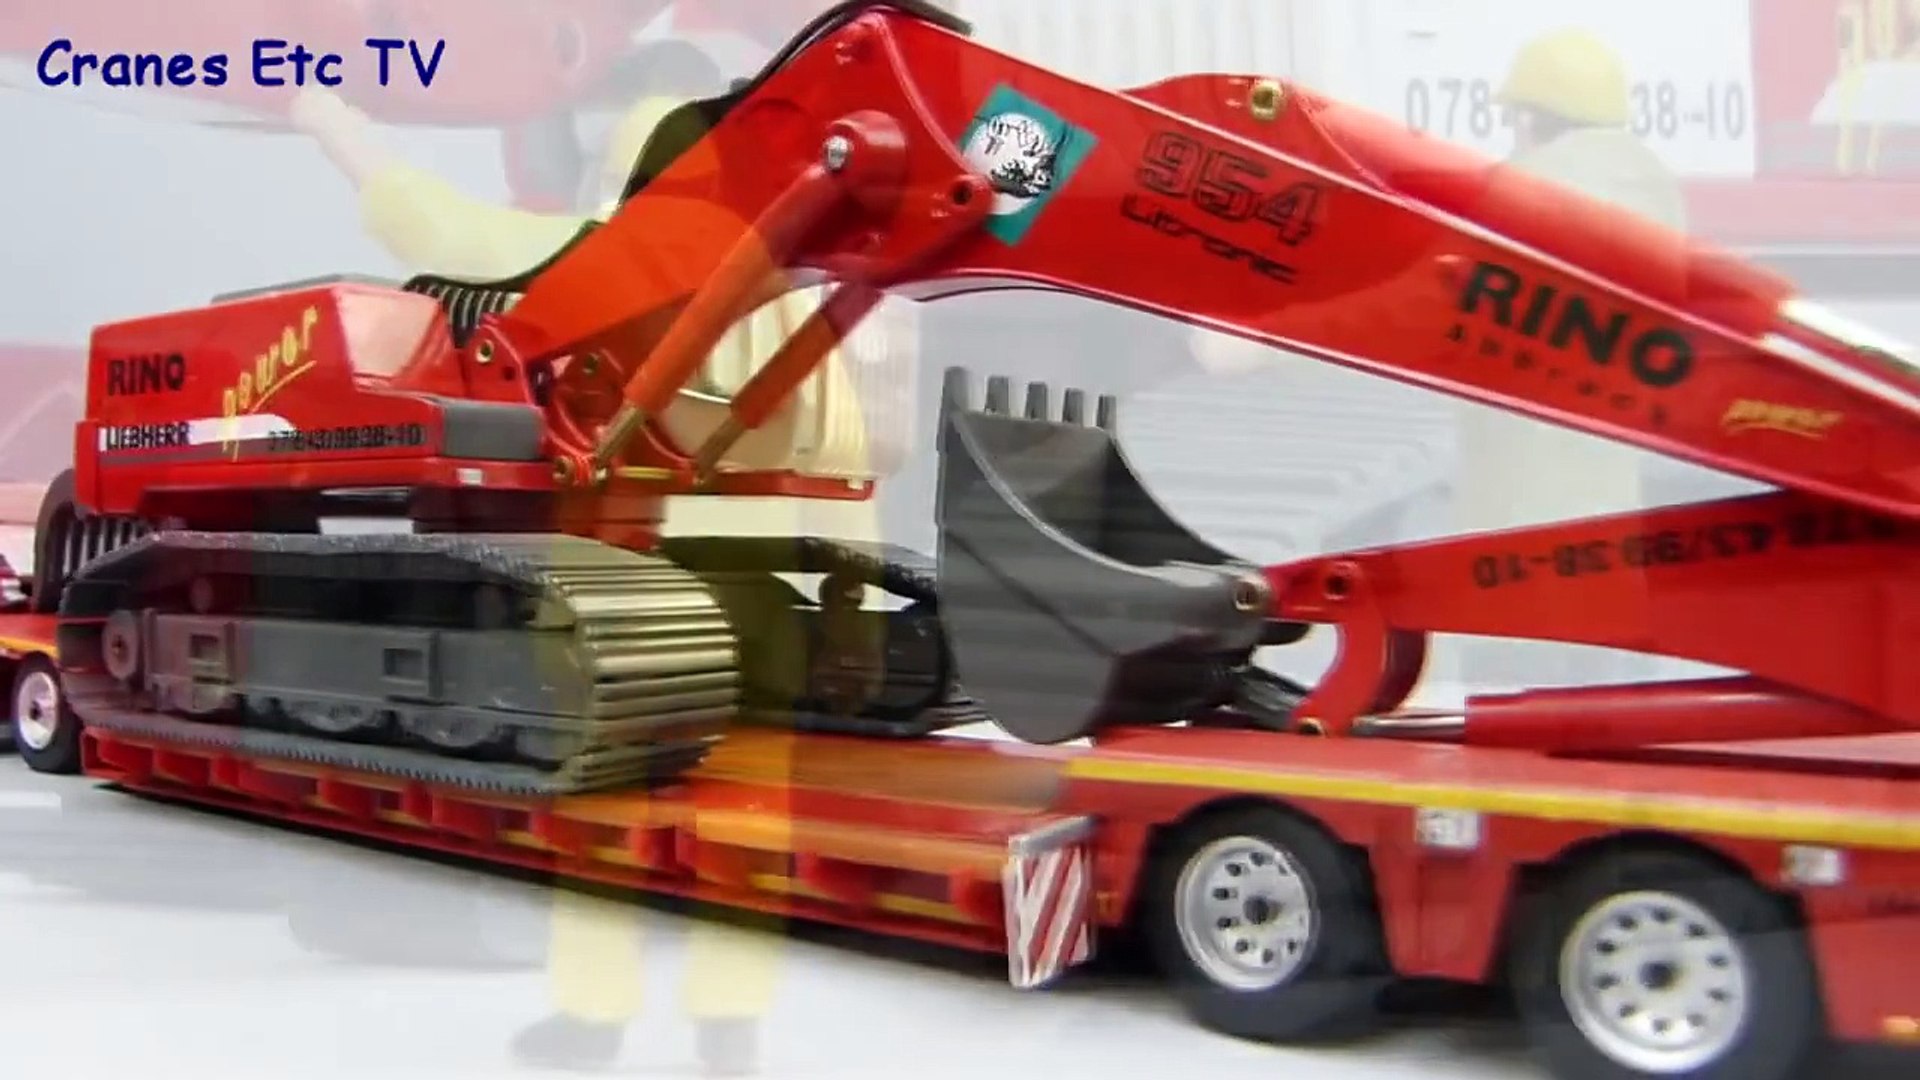 Conrad Liebherr R 954 Bv Demolition Excavator Rino By Cranes Etc Tv Video Dailymotion